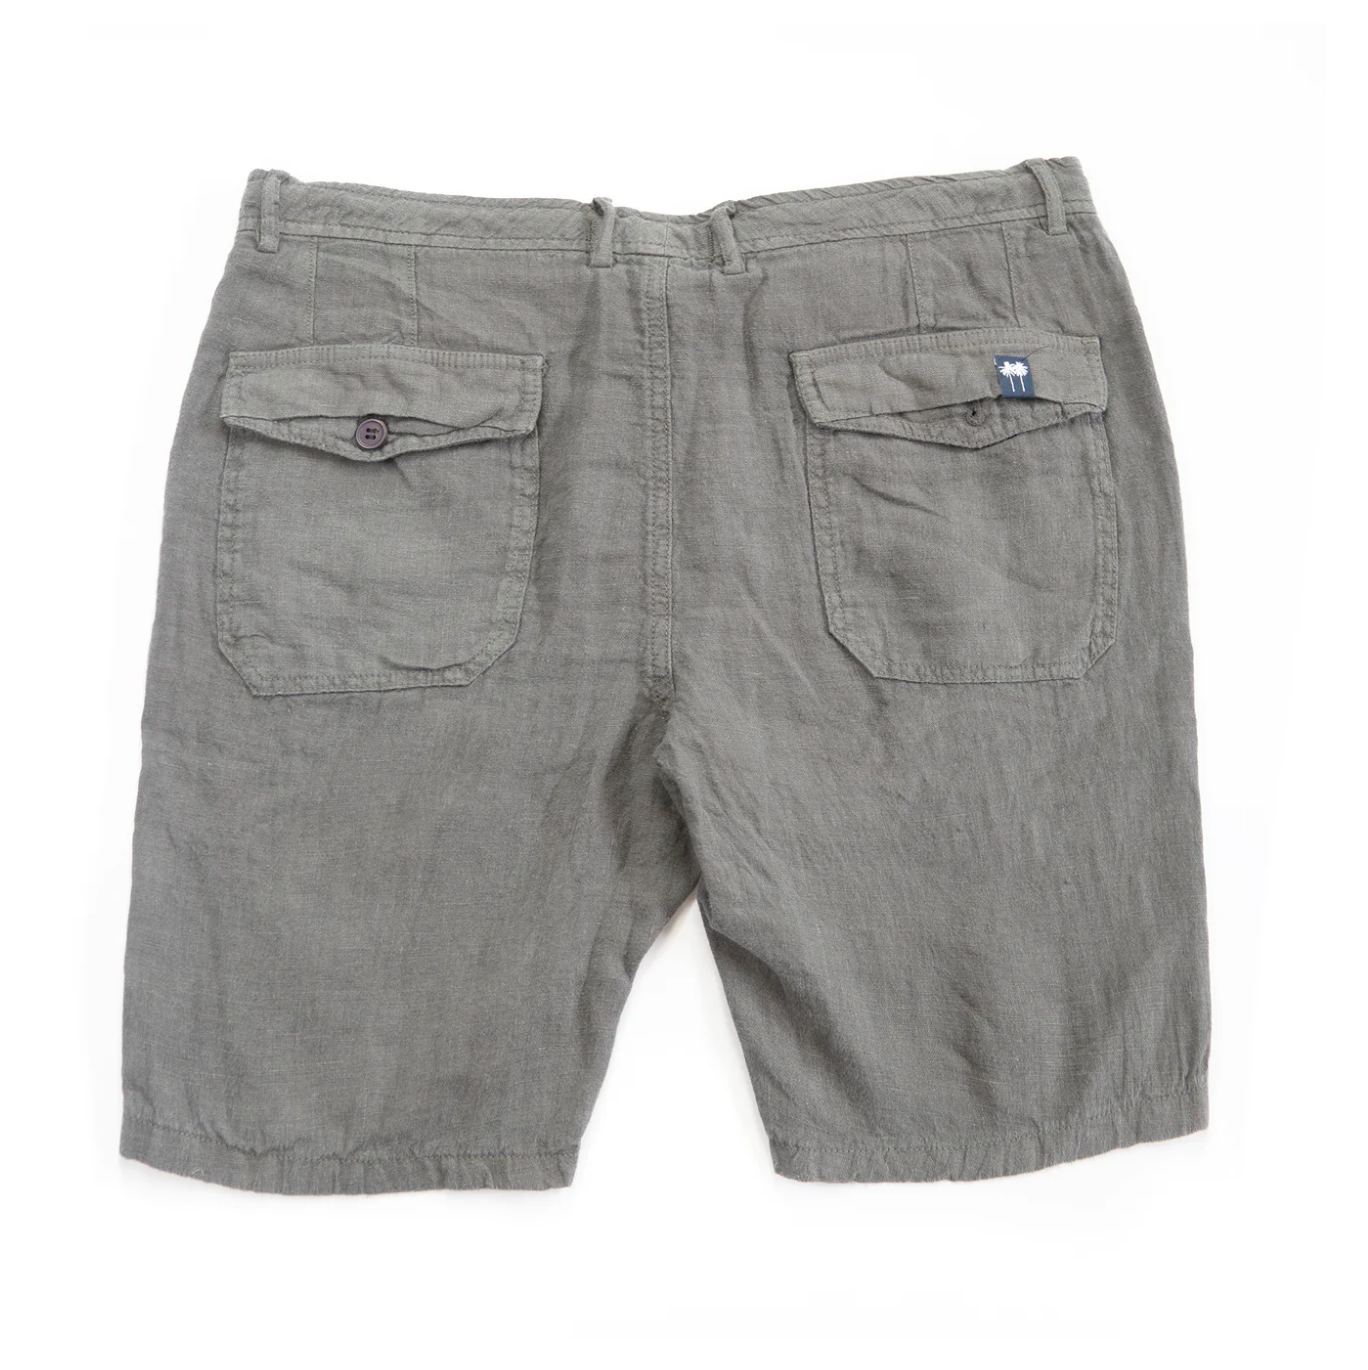 Benson - Palm Springs Linen Shorts - Light Grey